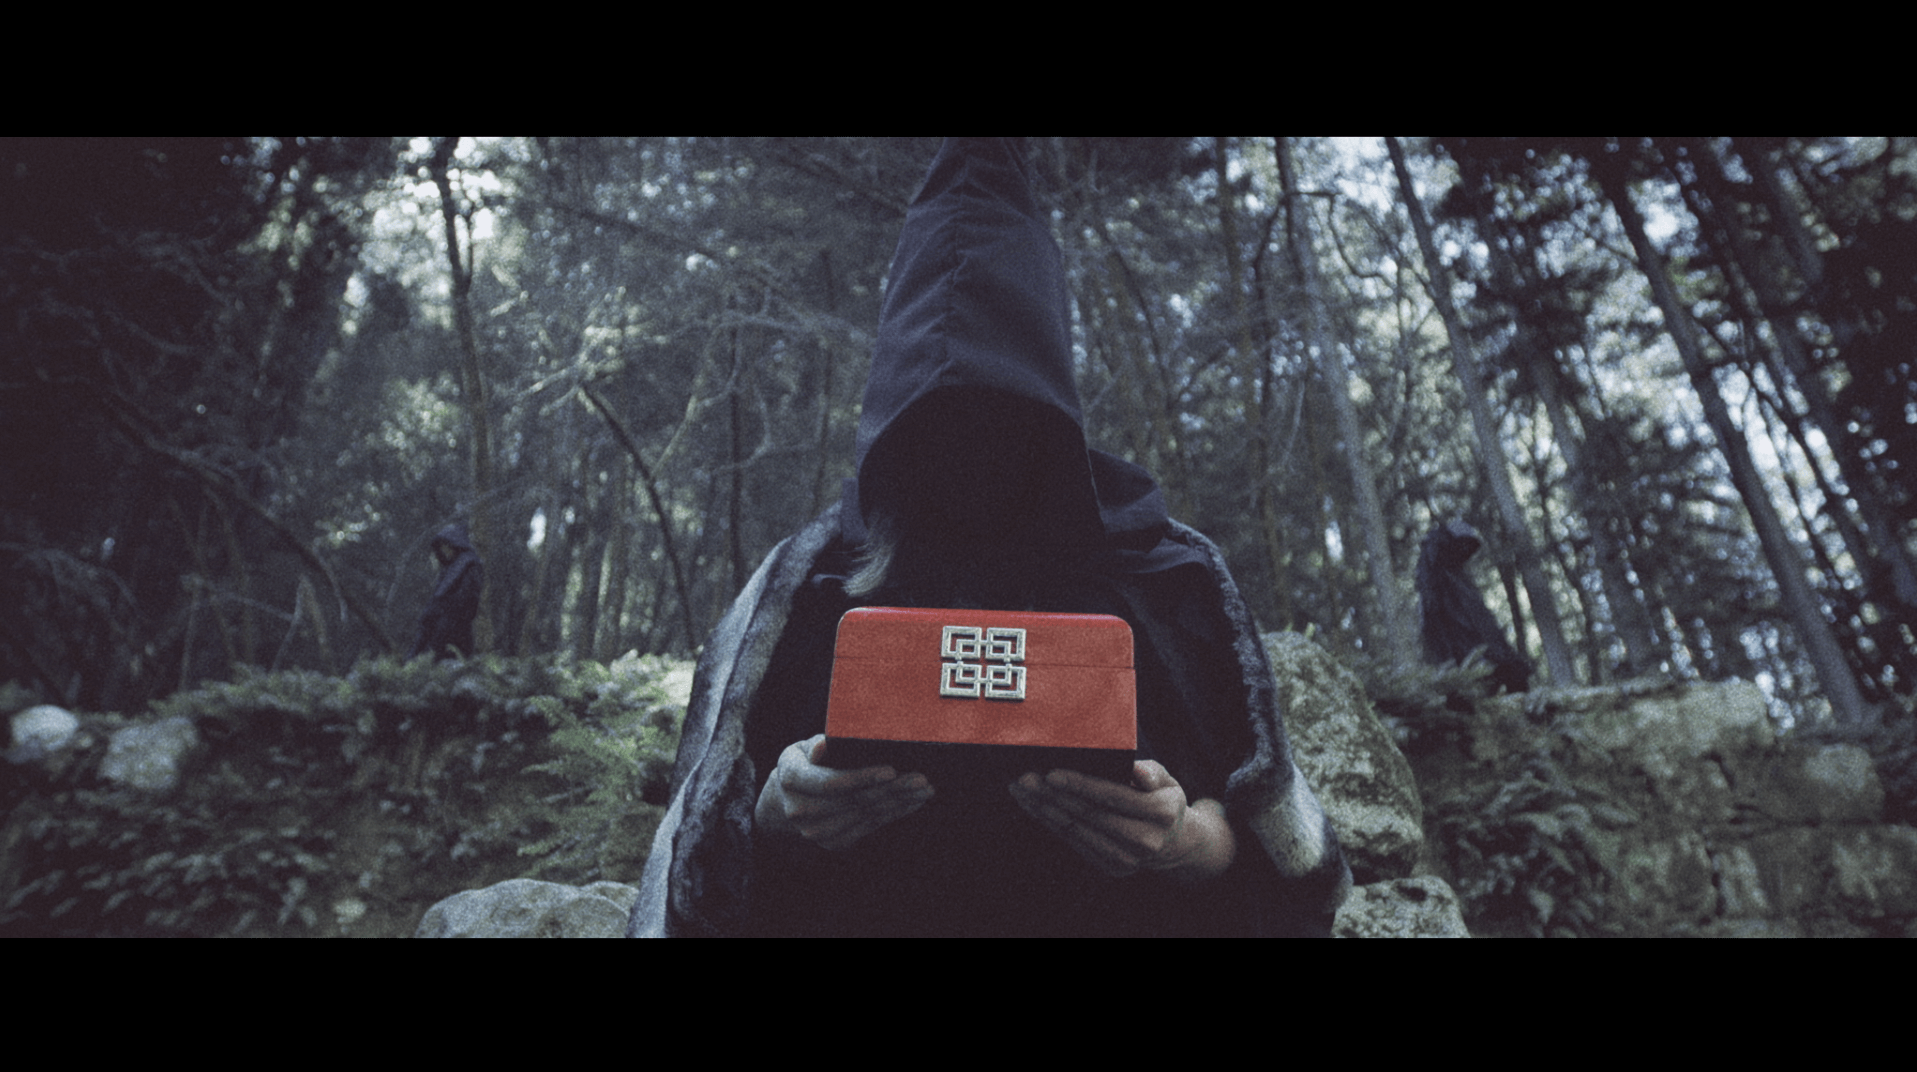 Kung Fu Vampire: New Music Video is Creepy